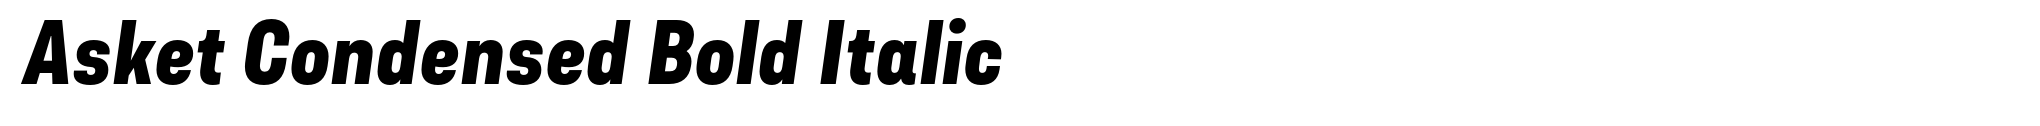 Asket Condensed Bold Italic image